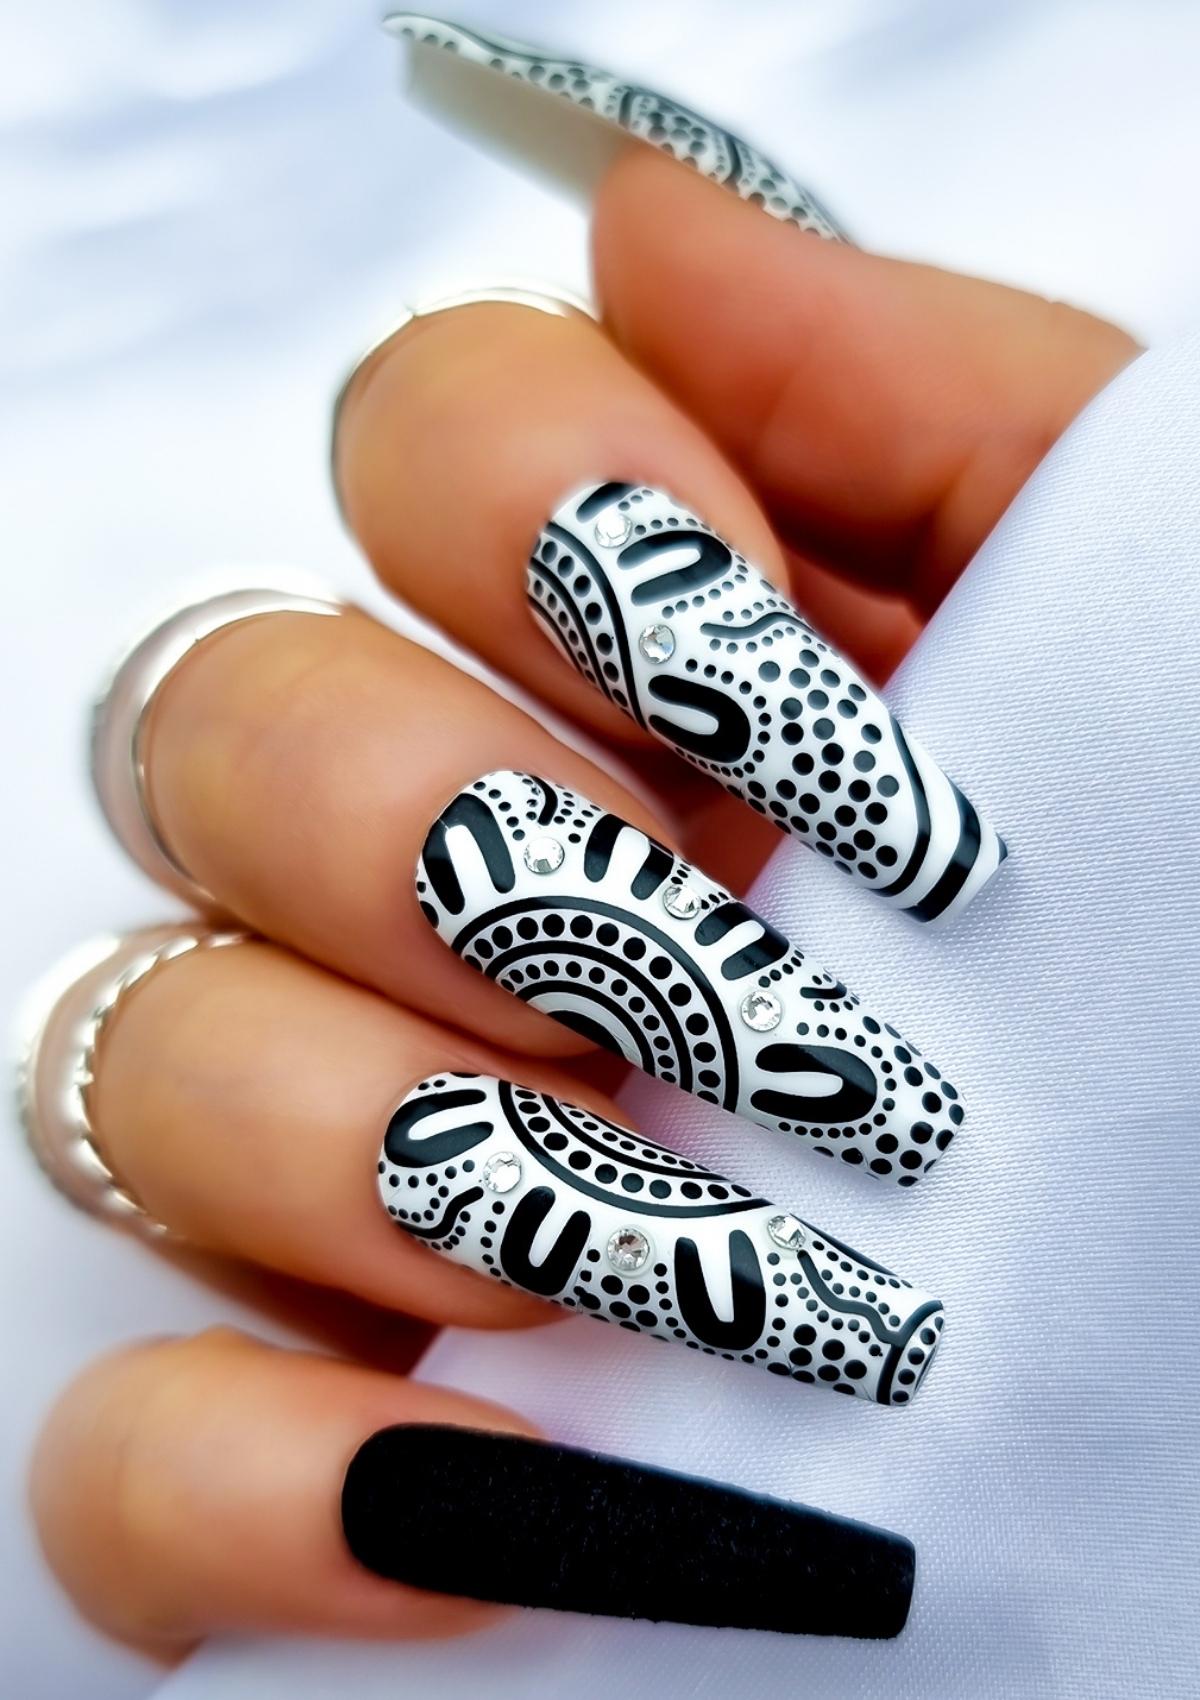 Black and white Aboriginal Australian nail art design